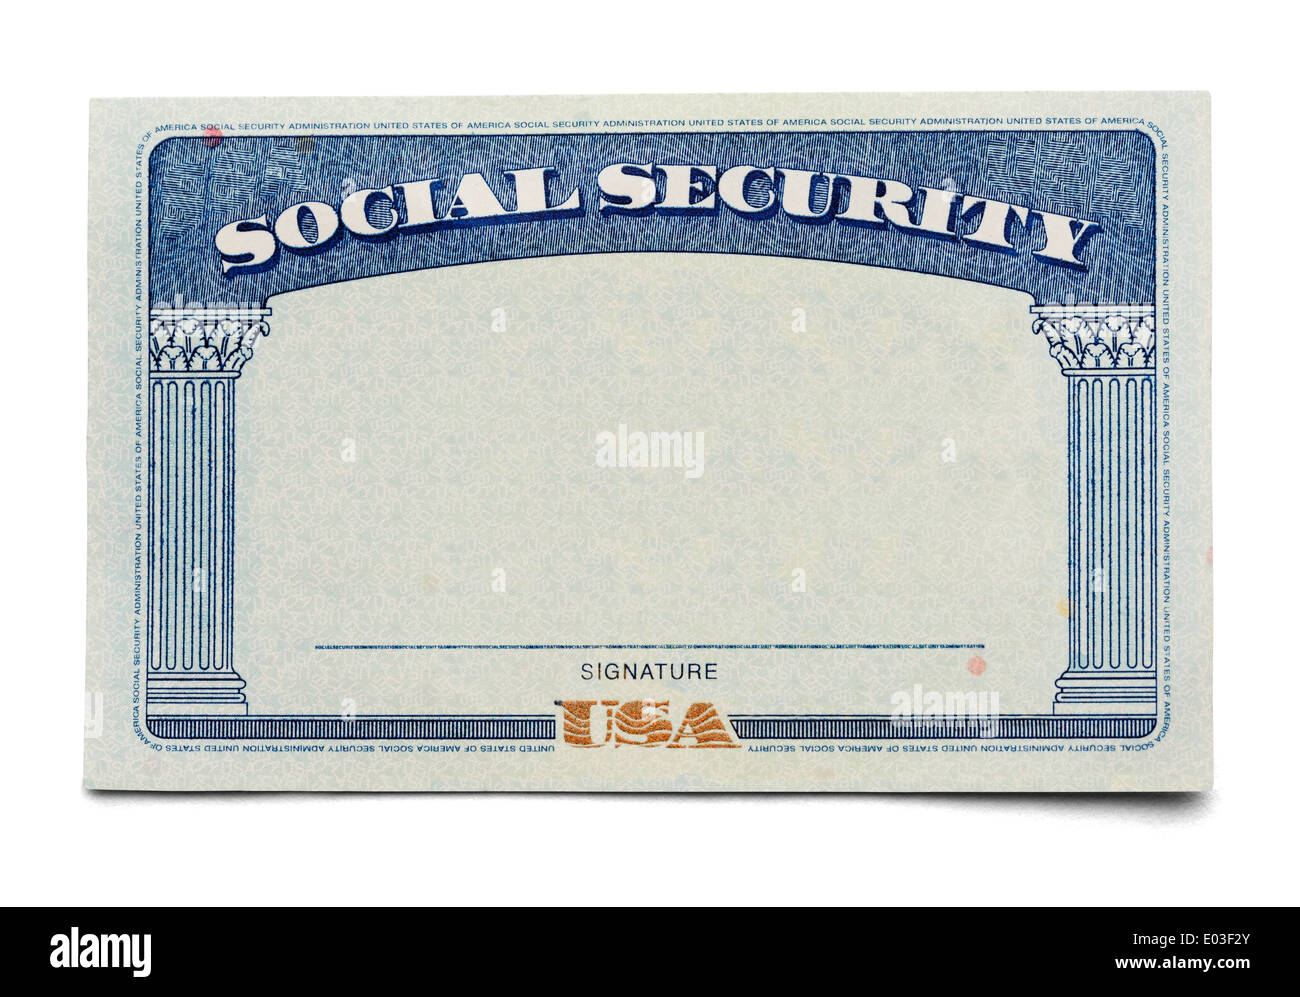 Blank Social Security Card isolato su uno sfondo bianco. Foto Stock